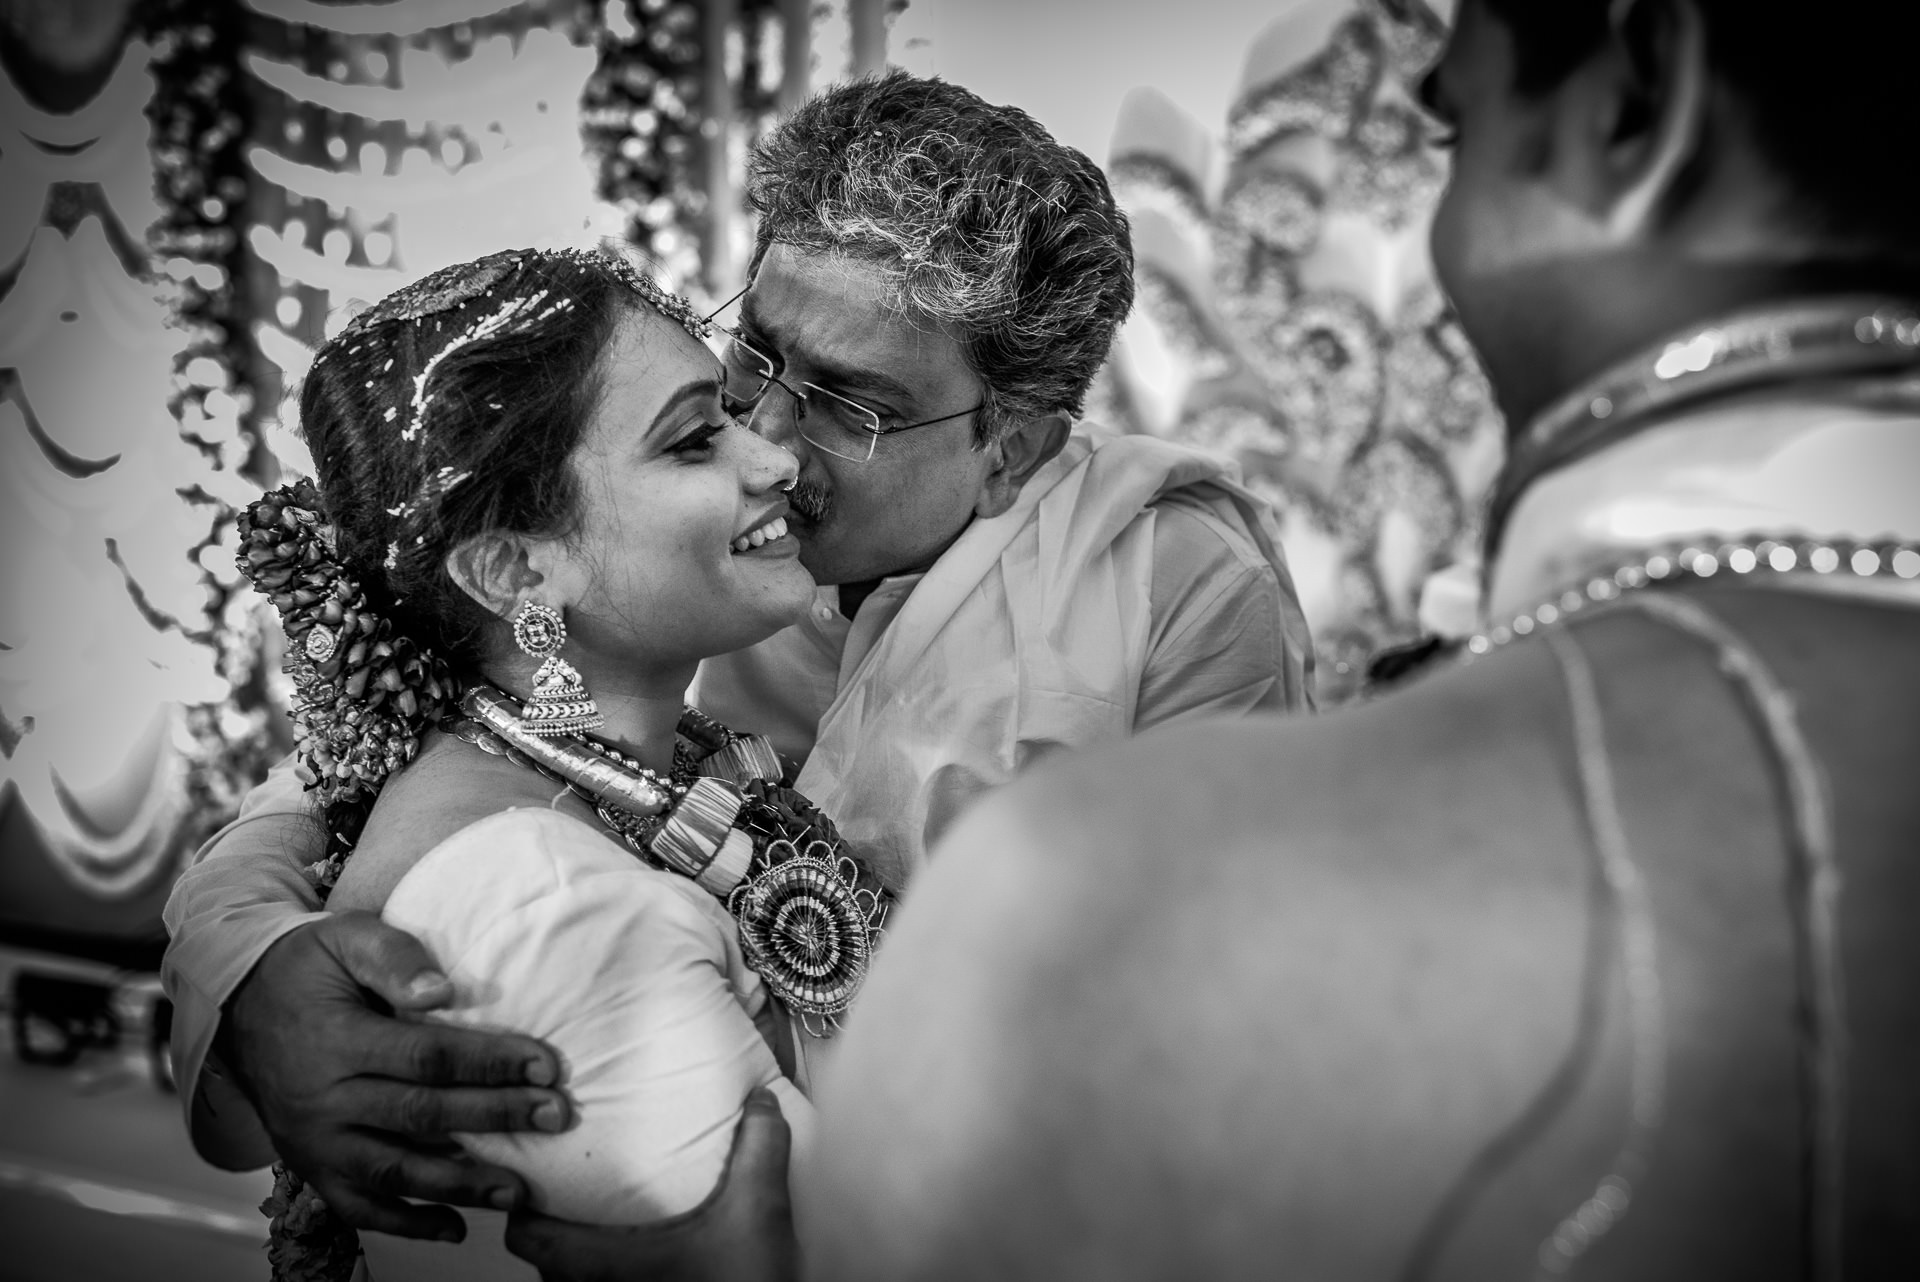 Capturing Traditional Telugu Weddings. A Colorful Traditional Telugu Wedding in Vijyawada.